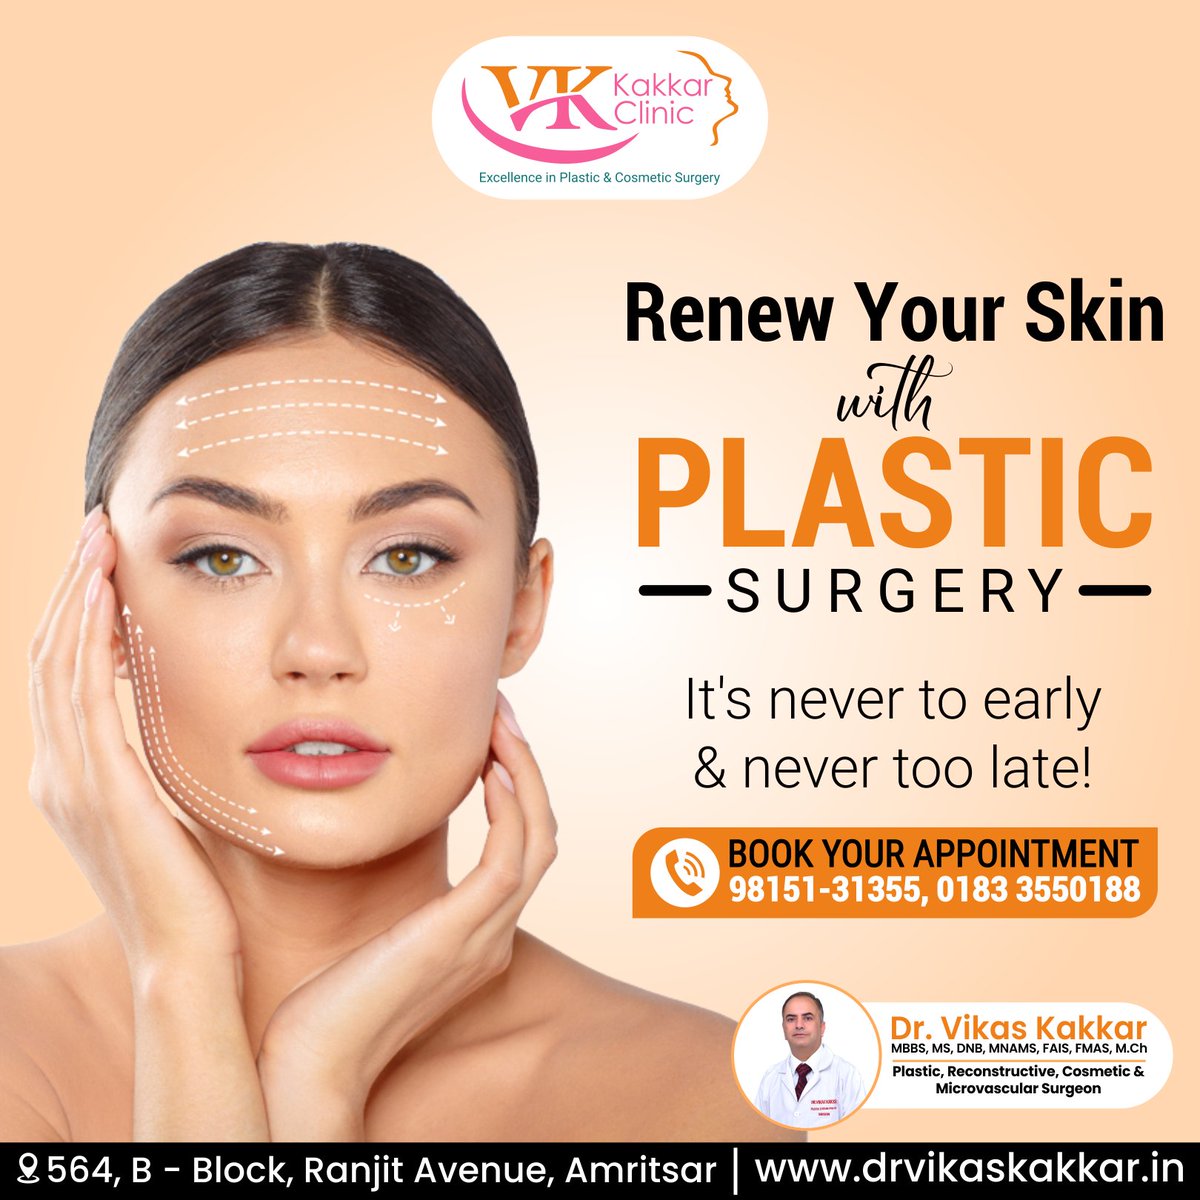 Renew your skin with plastic surgery It's never to early & never too late!
Feel free to reach us at: 👨‍⚕️Dr. Vikas Kakkar
(Cosmetic & Plastic Surgeon)
📞87268-00955
📞 0183-2500955
📍 Kakkar Clinic, 564-B- Block, Ranjit Avenue, Amritsar
#plasticsurgery #noseshape #gynecomastia